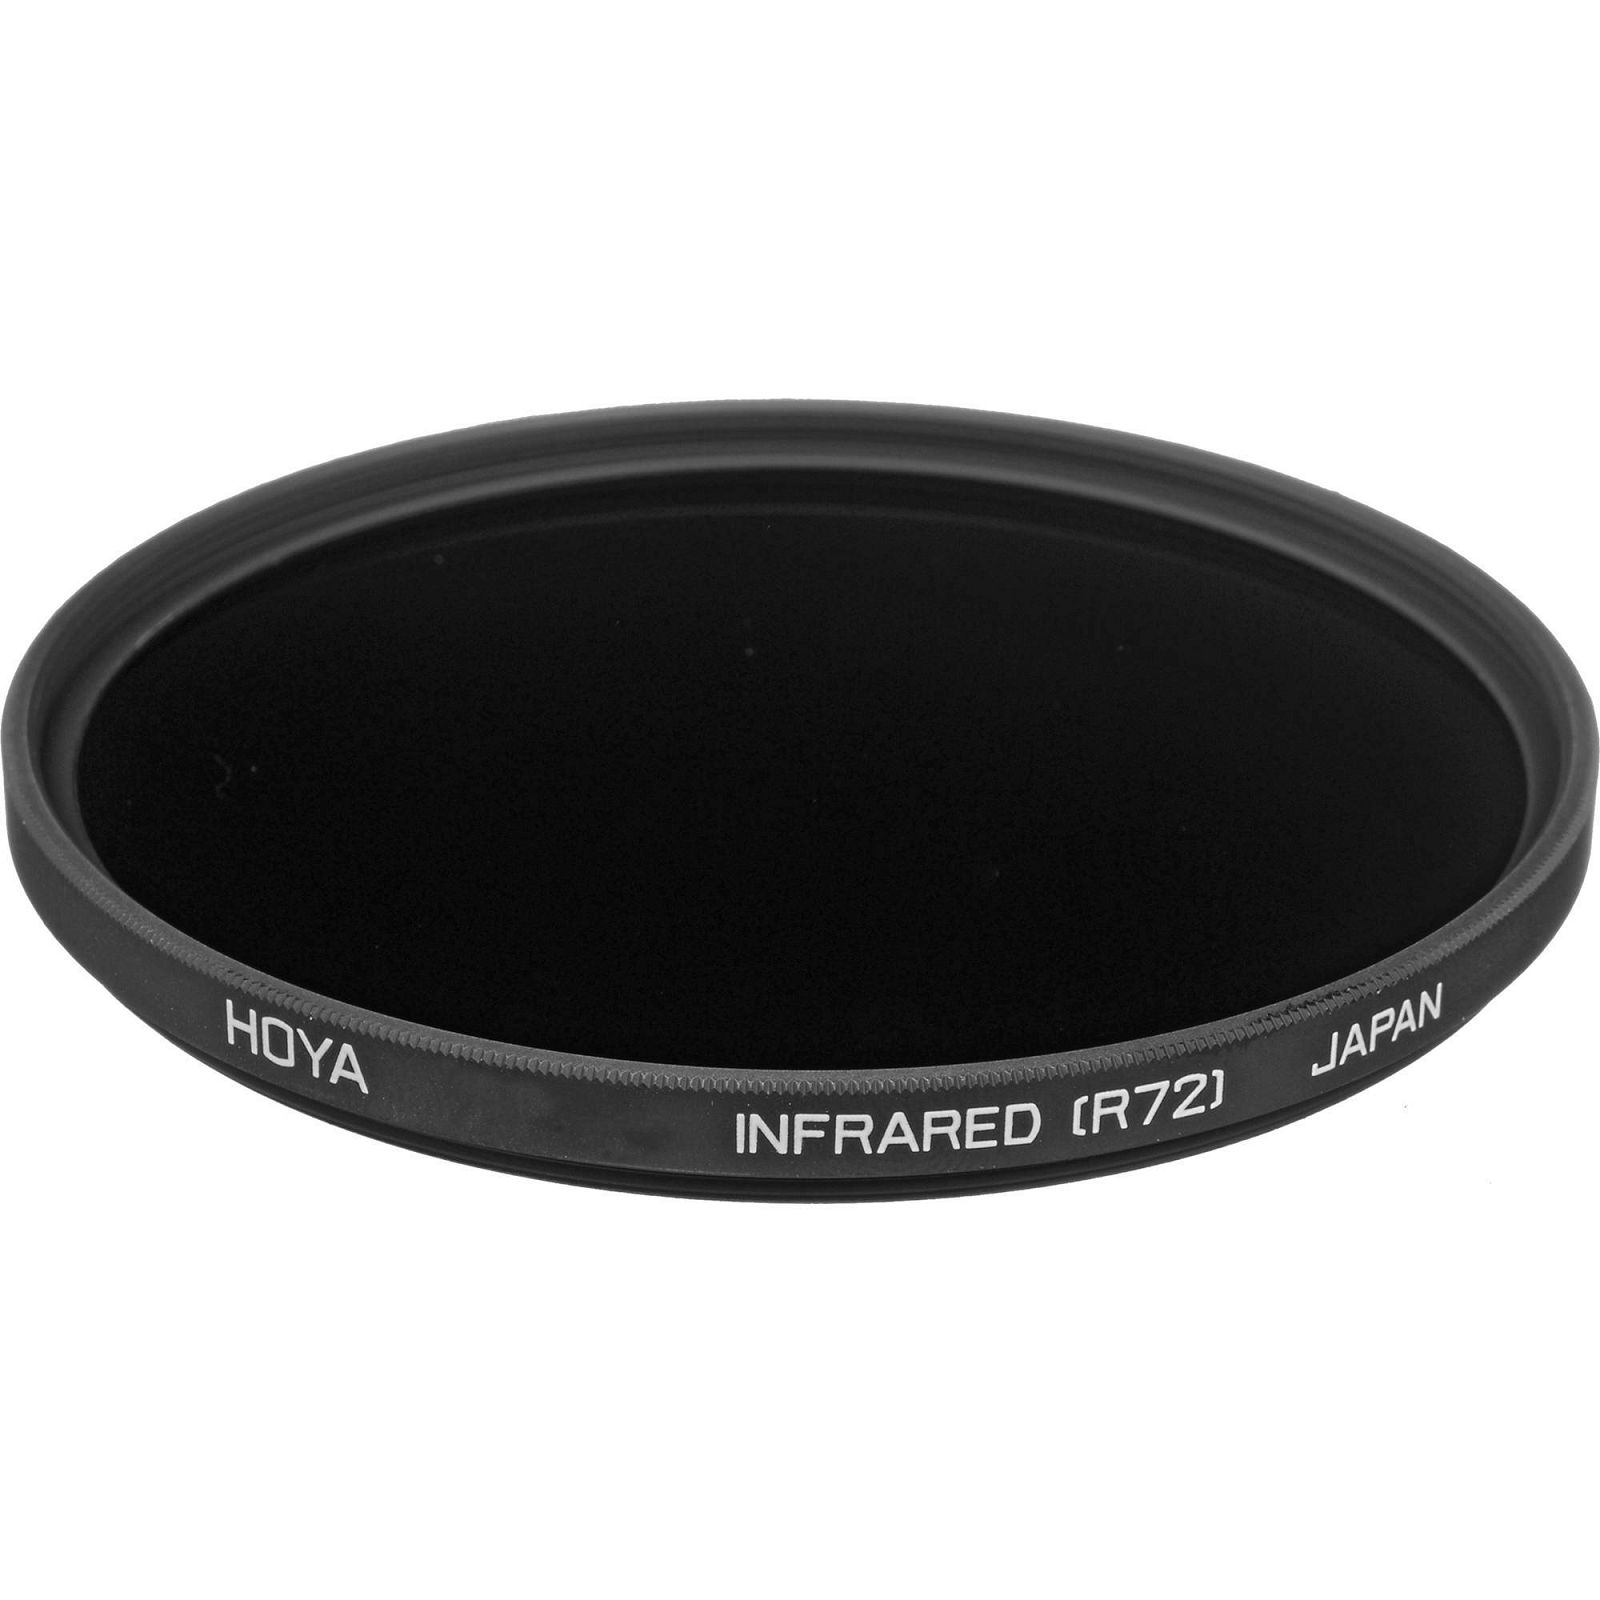 Hoya Infrared R72 filter 95mm